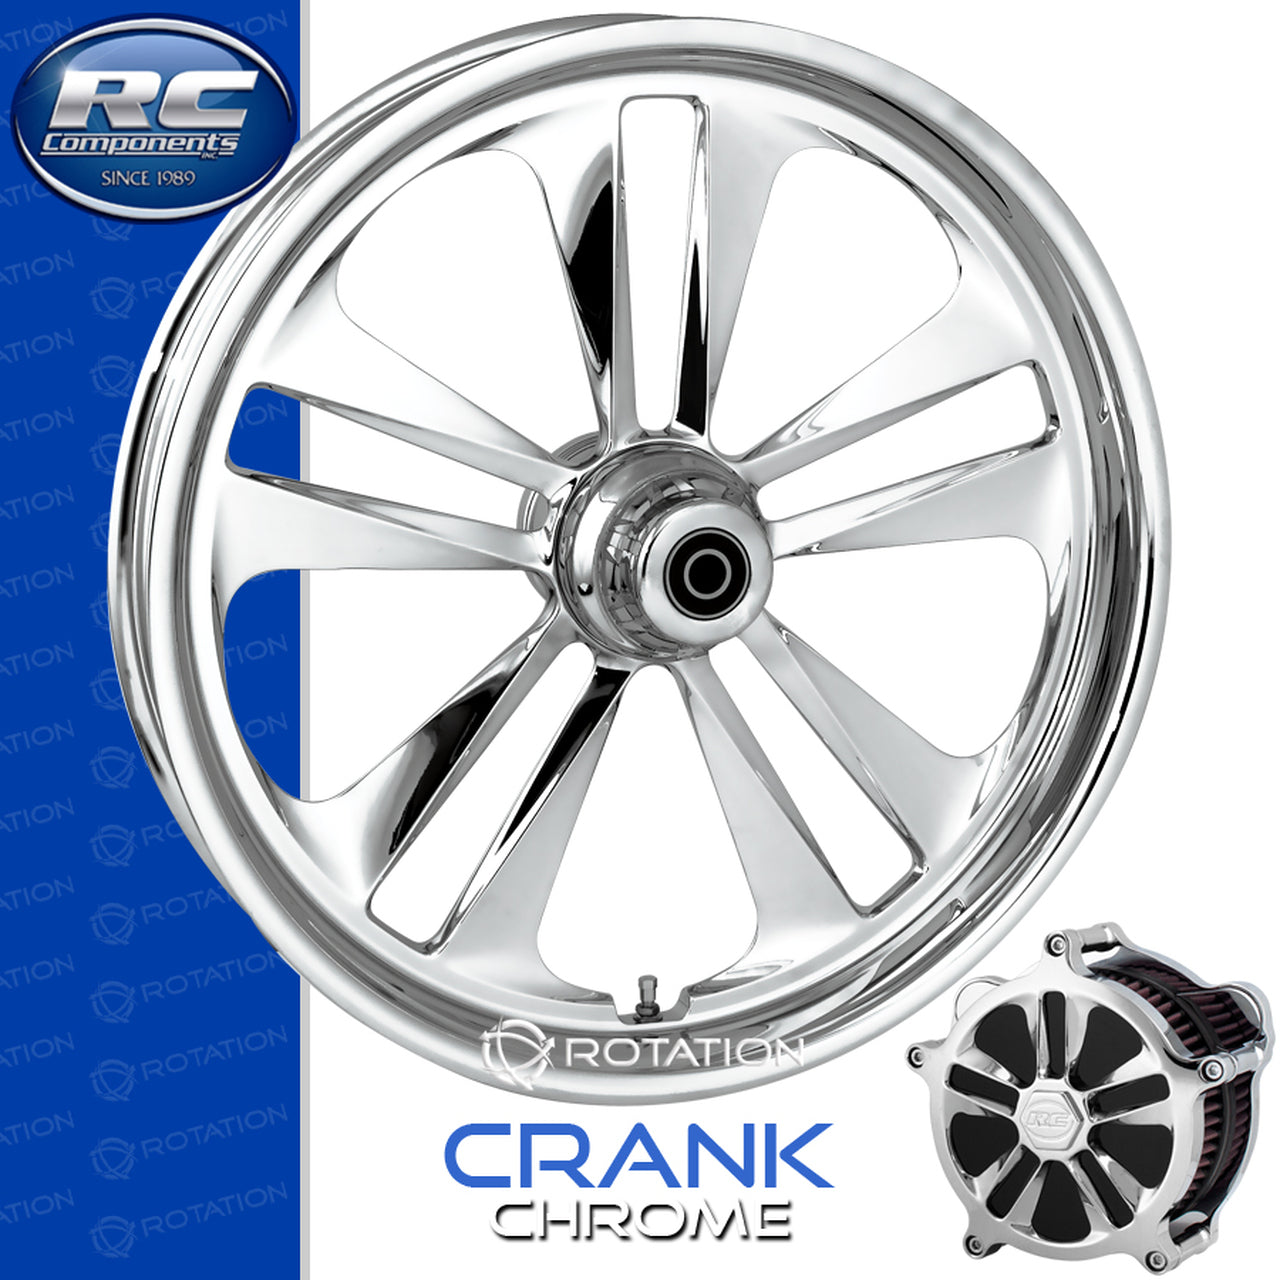 RC Components Crank Chrome Touring Wheel